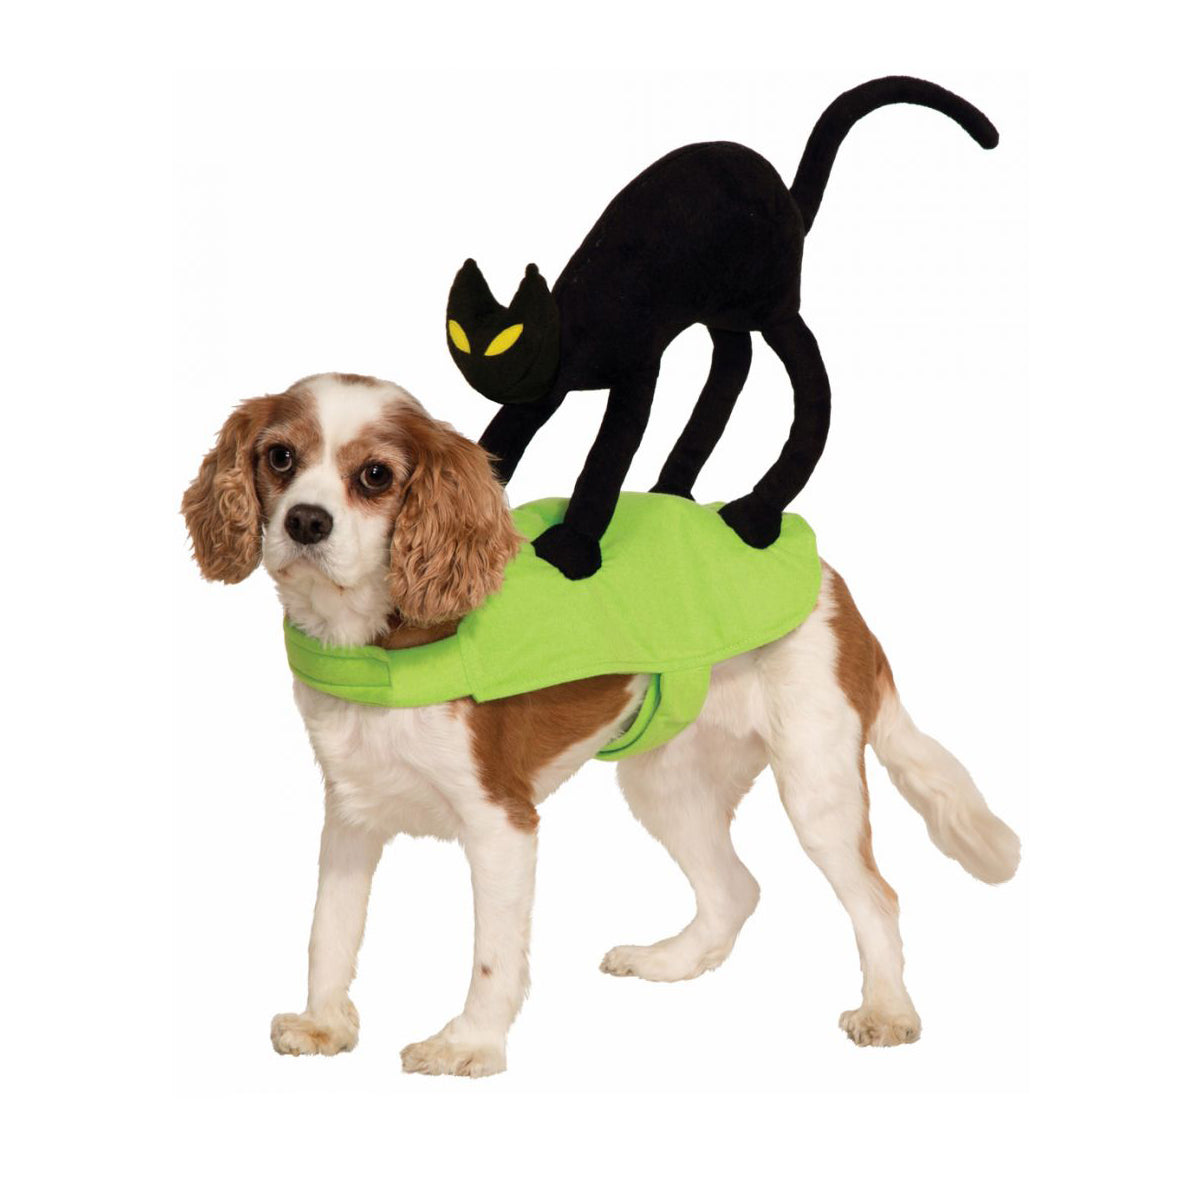 Cat on Dog Costume